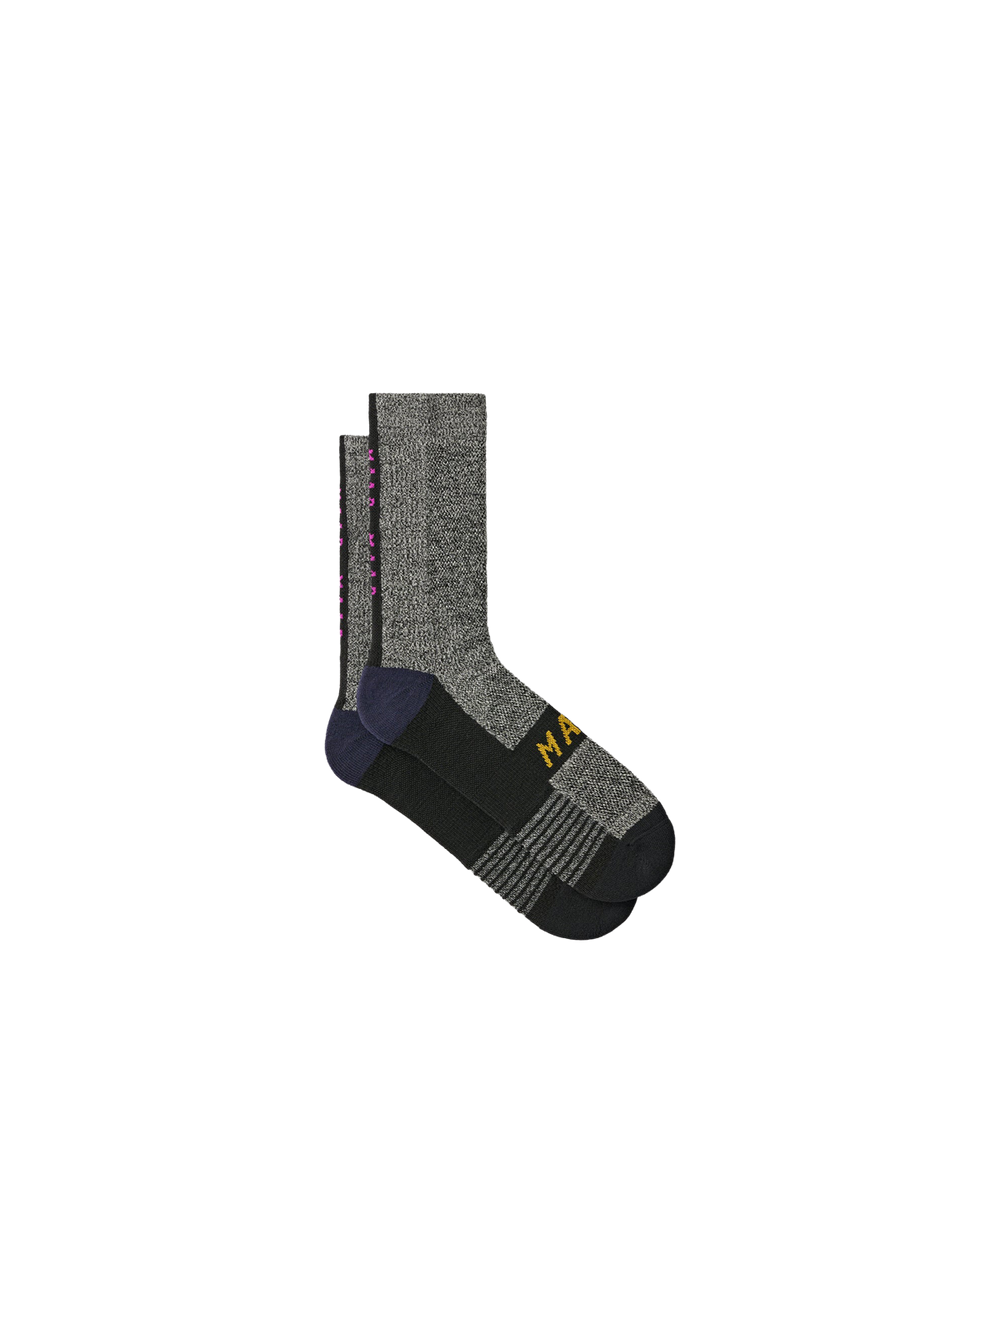 Product Image for Alt_Road Merino Space Dye Sock